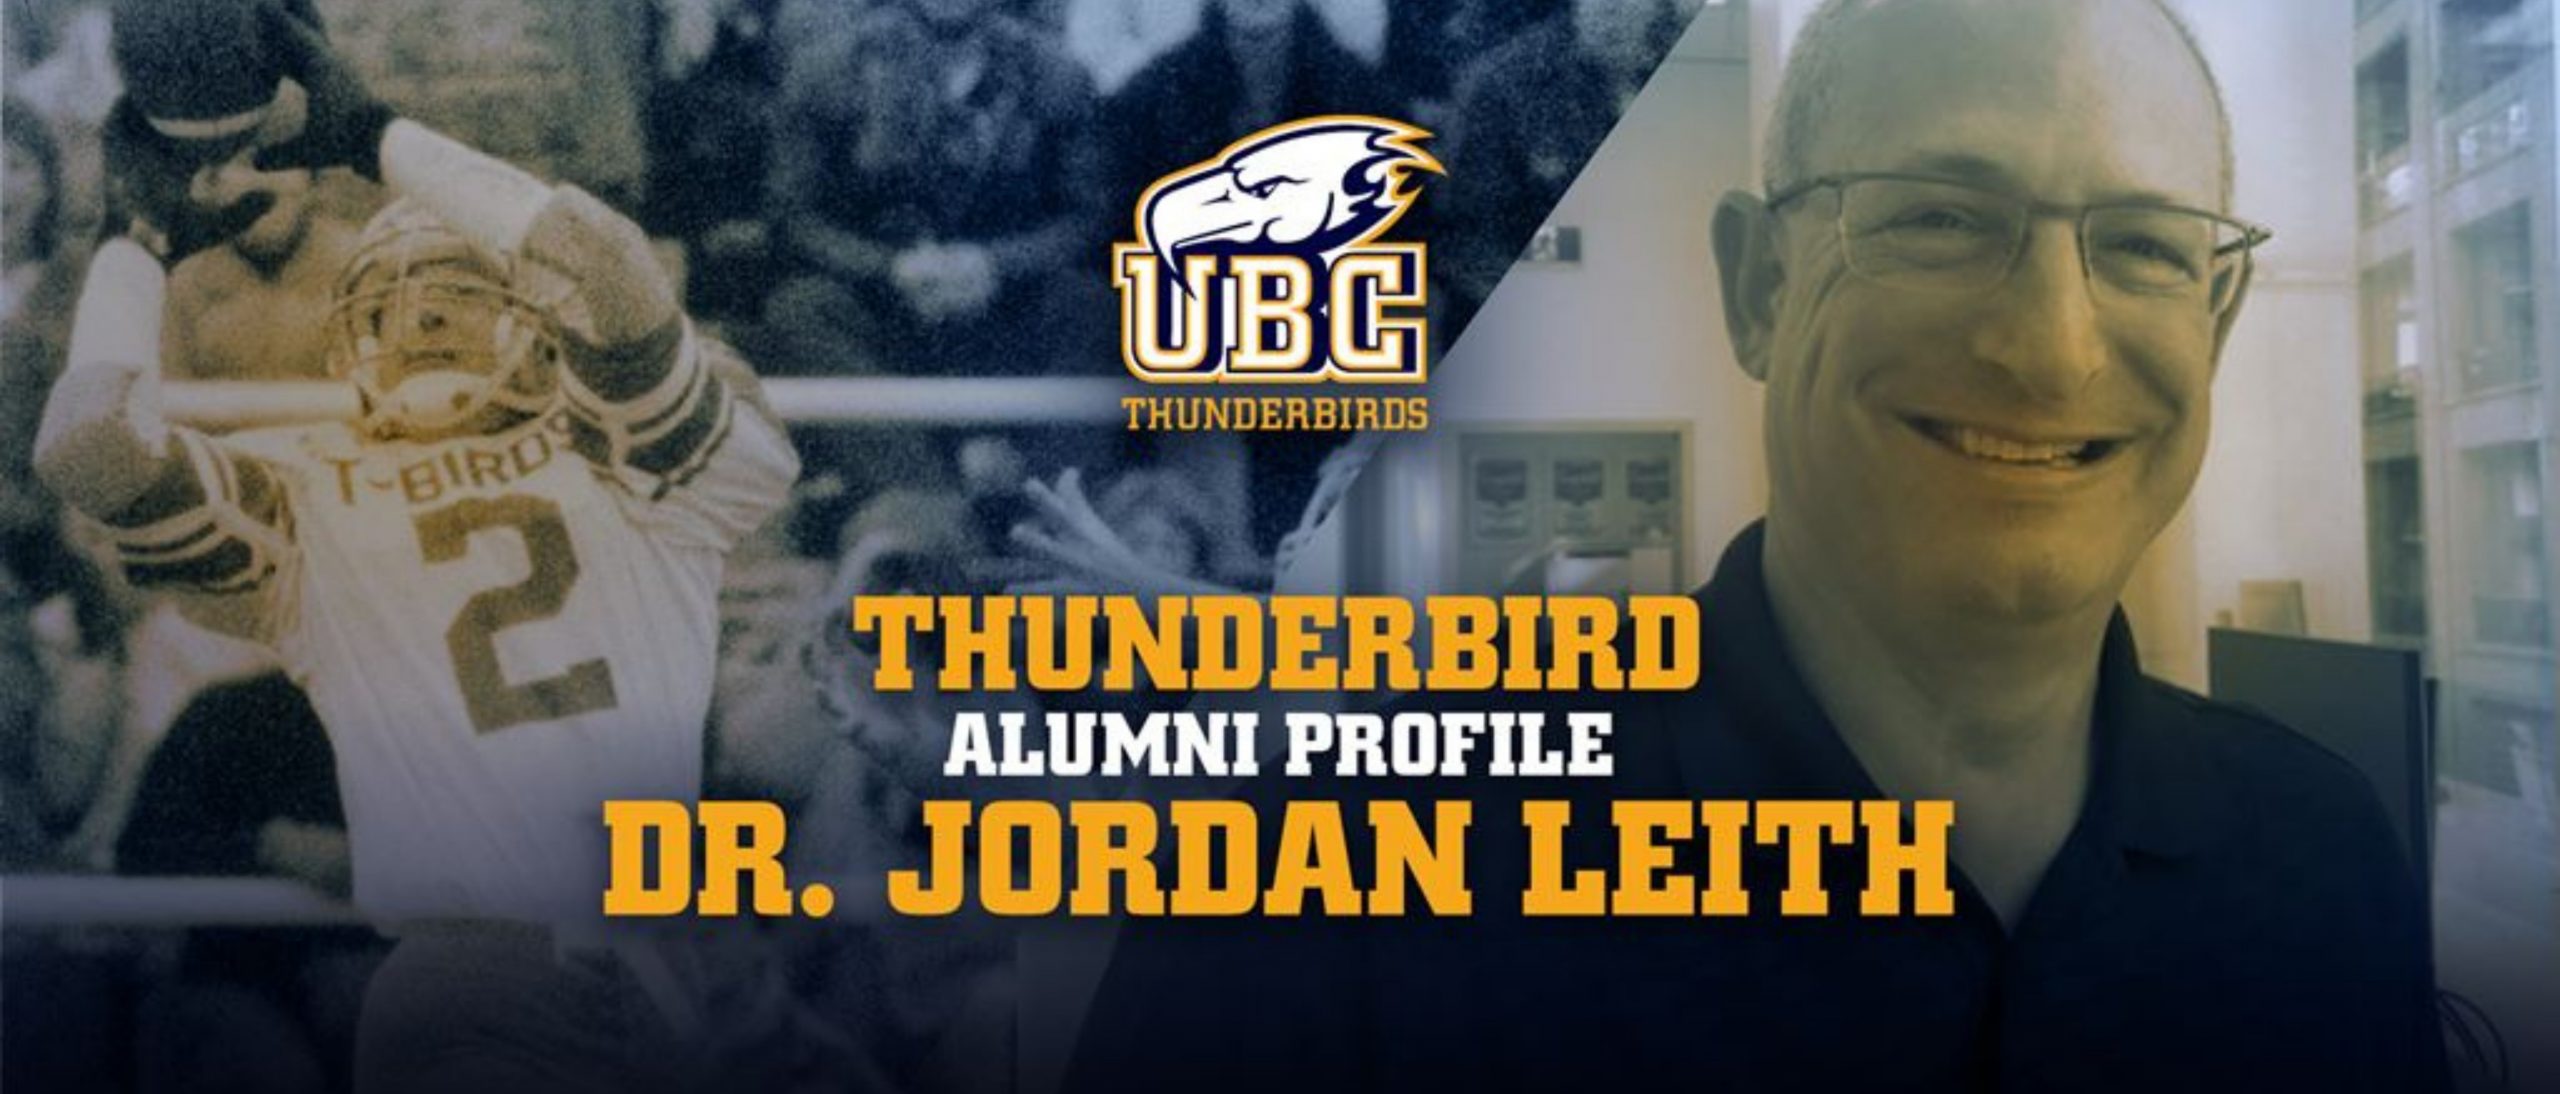 Dr. Jordan Leith featured in UBC Thunderbird Alumni Profile series